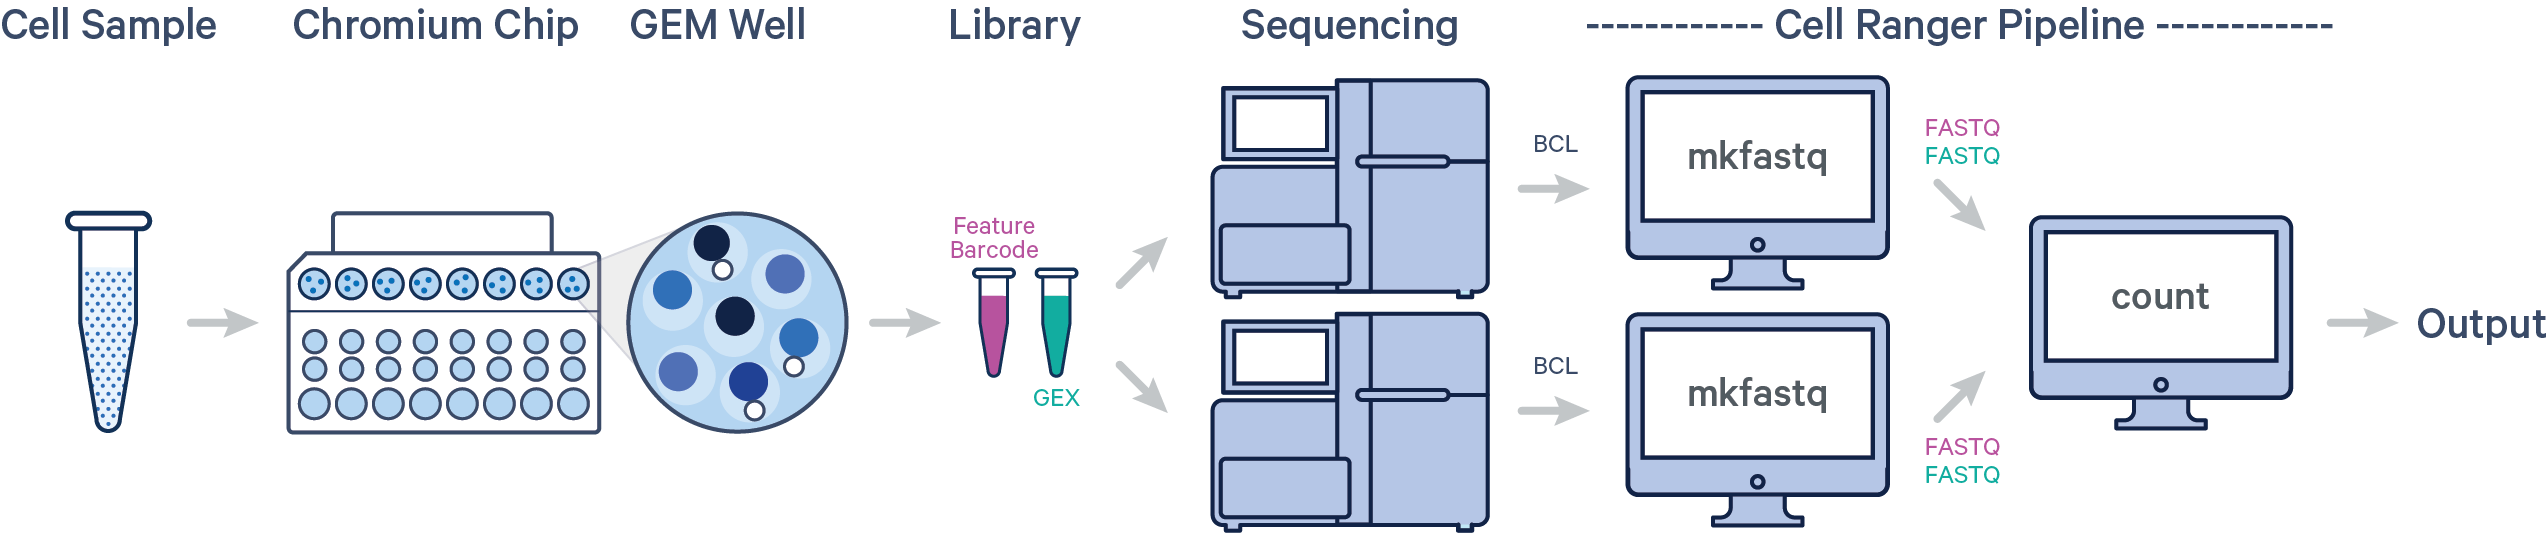 cellranger multiple sequencing runs